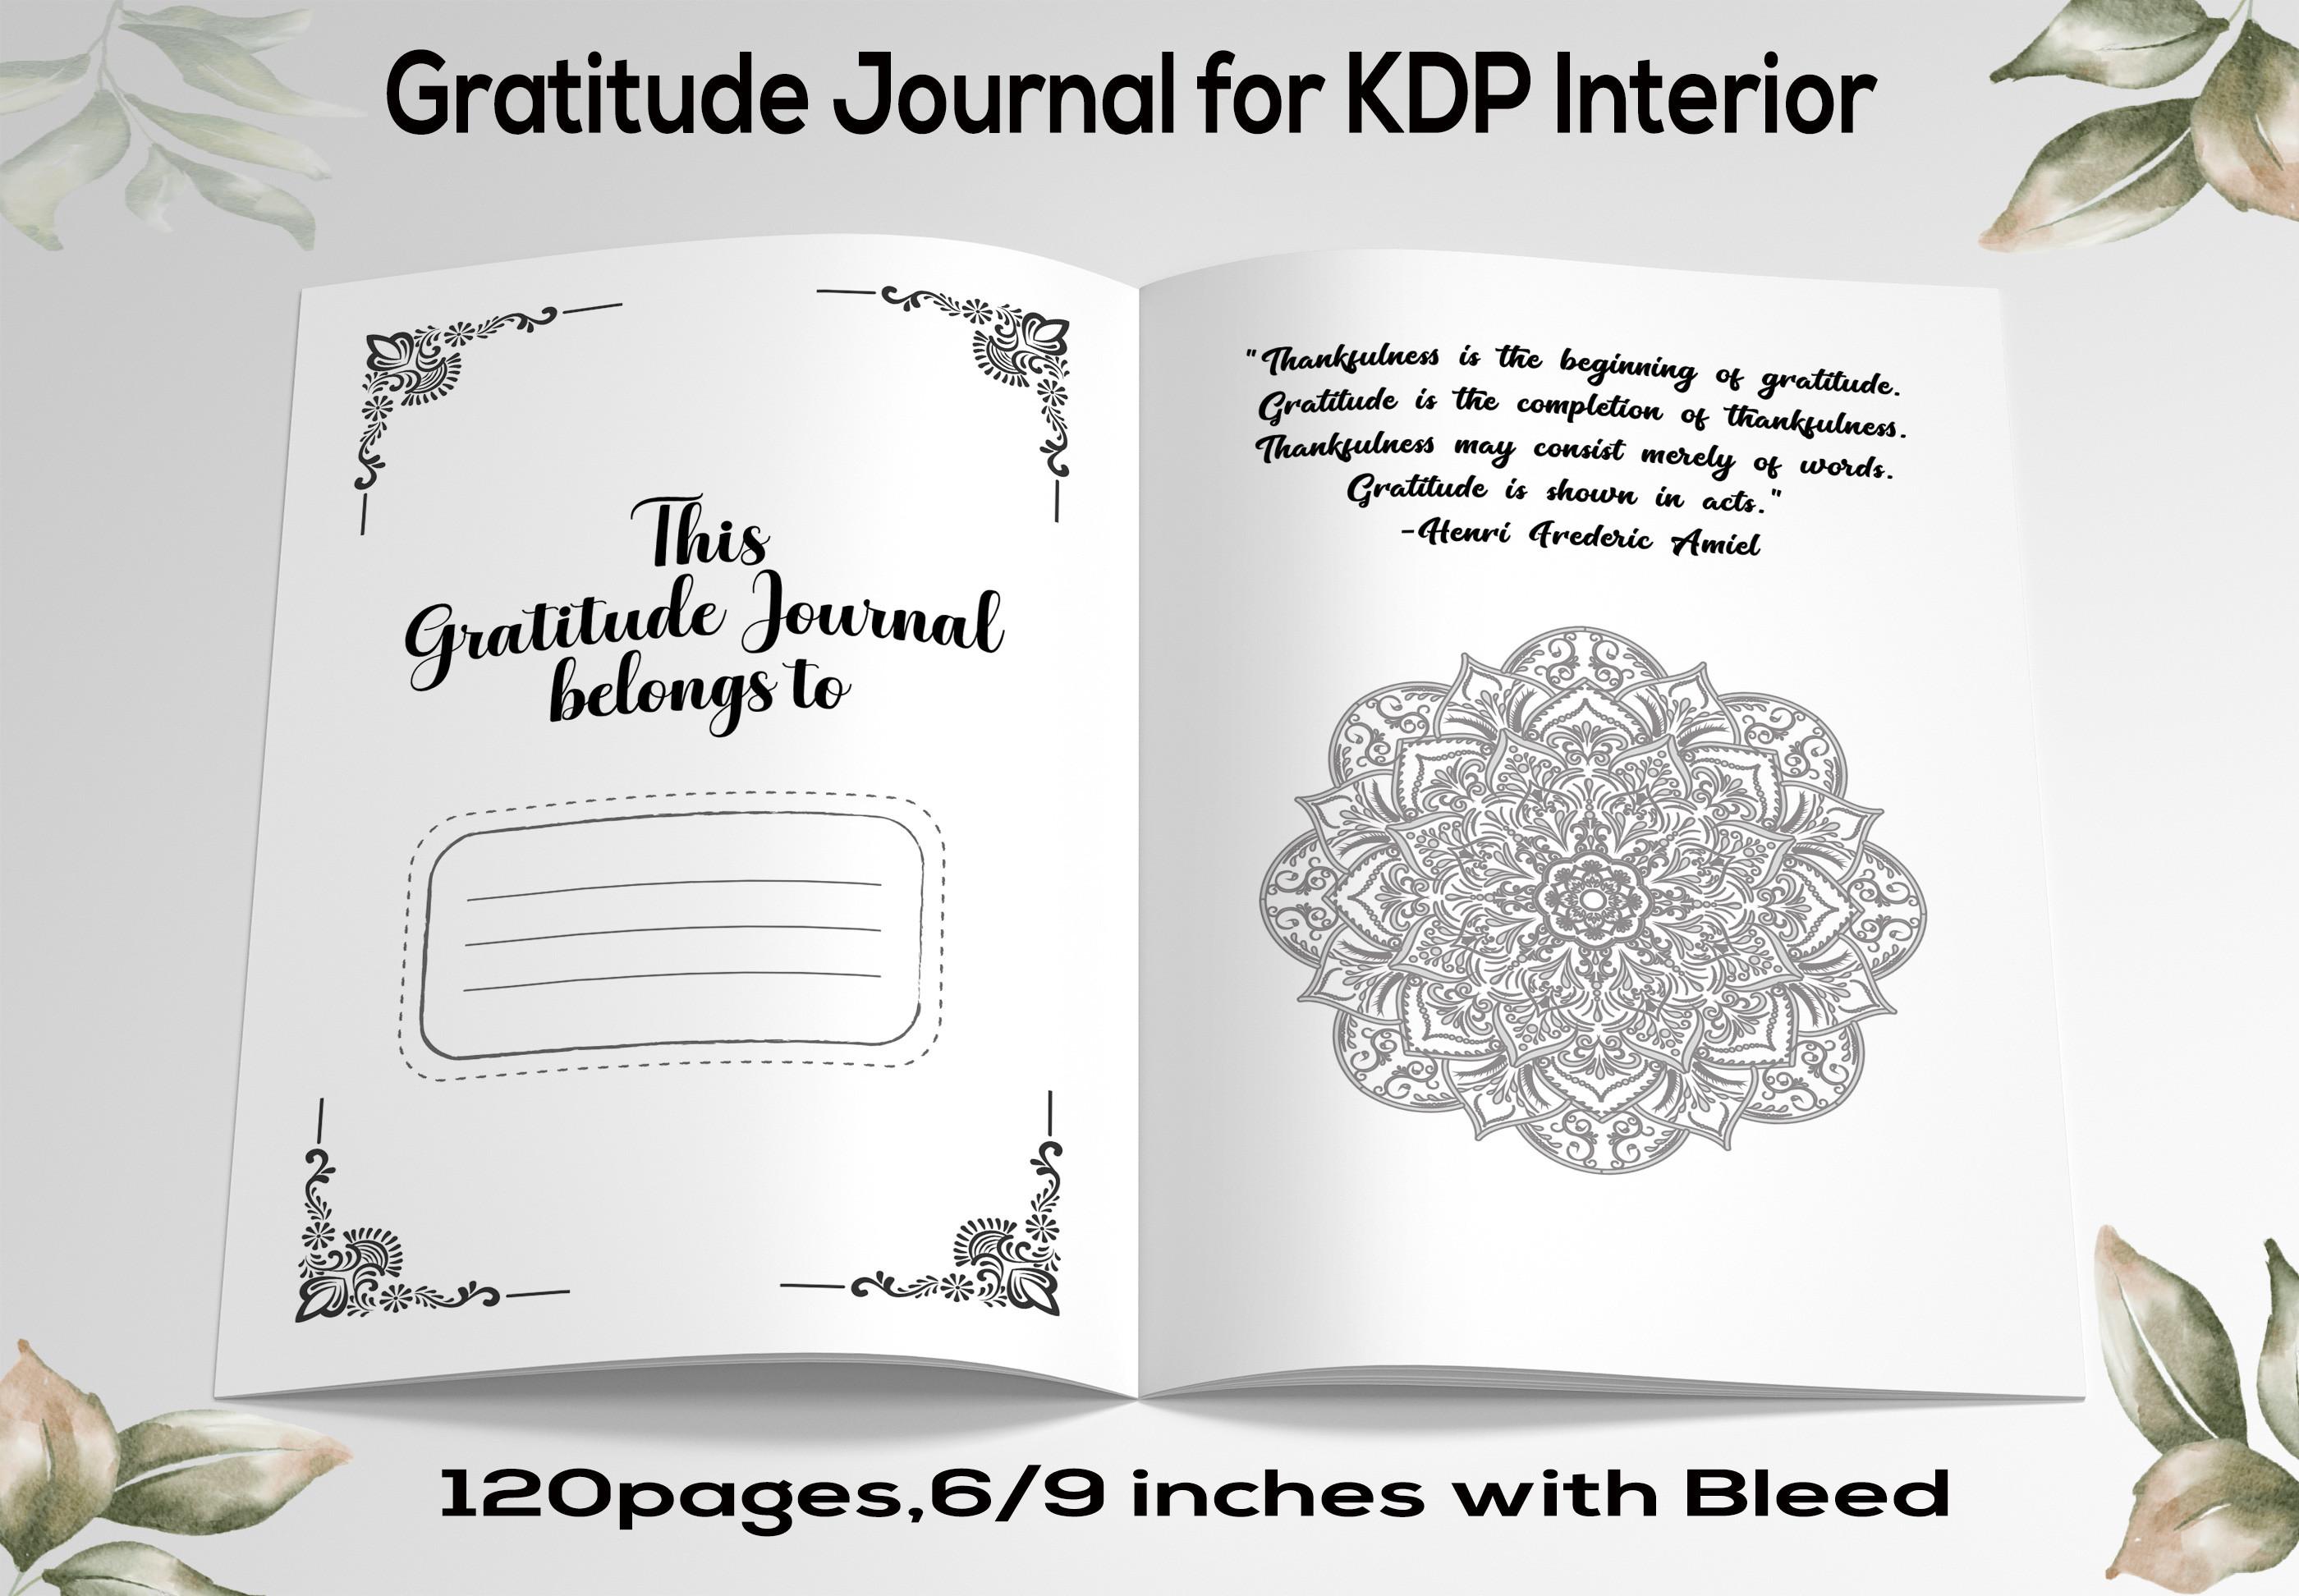 Gratitude Journal for KDP Interior,Vol 1